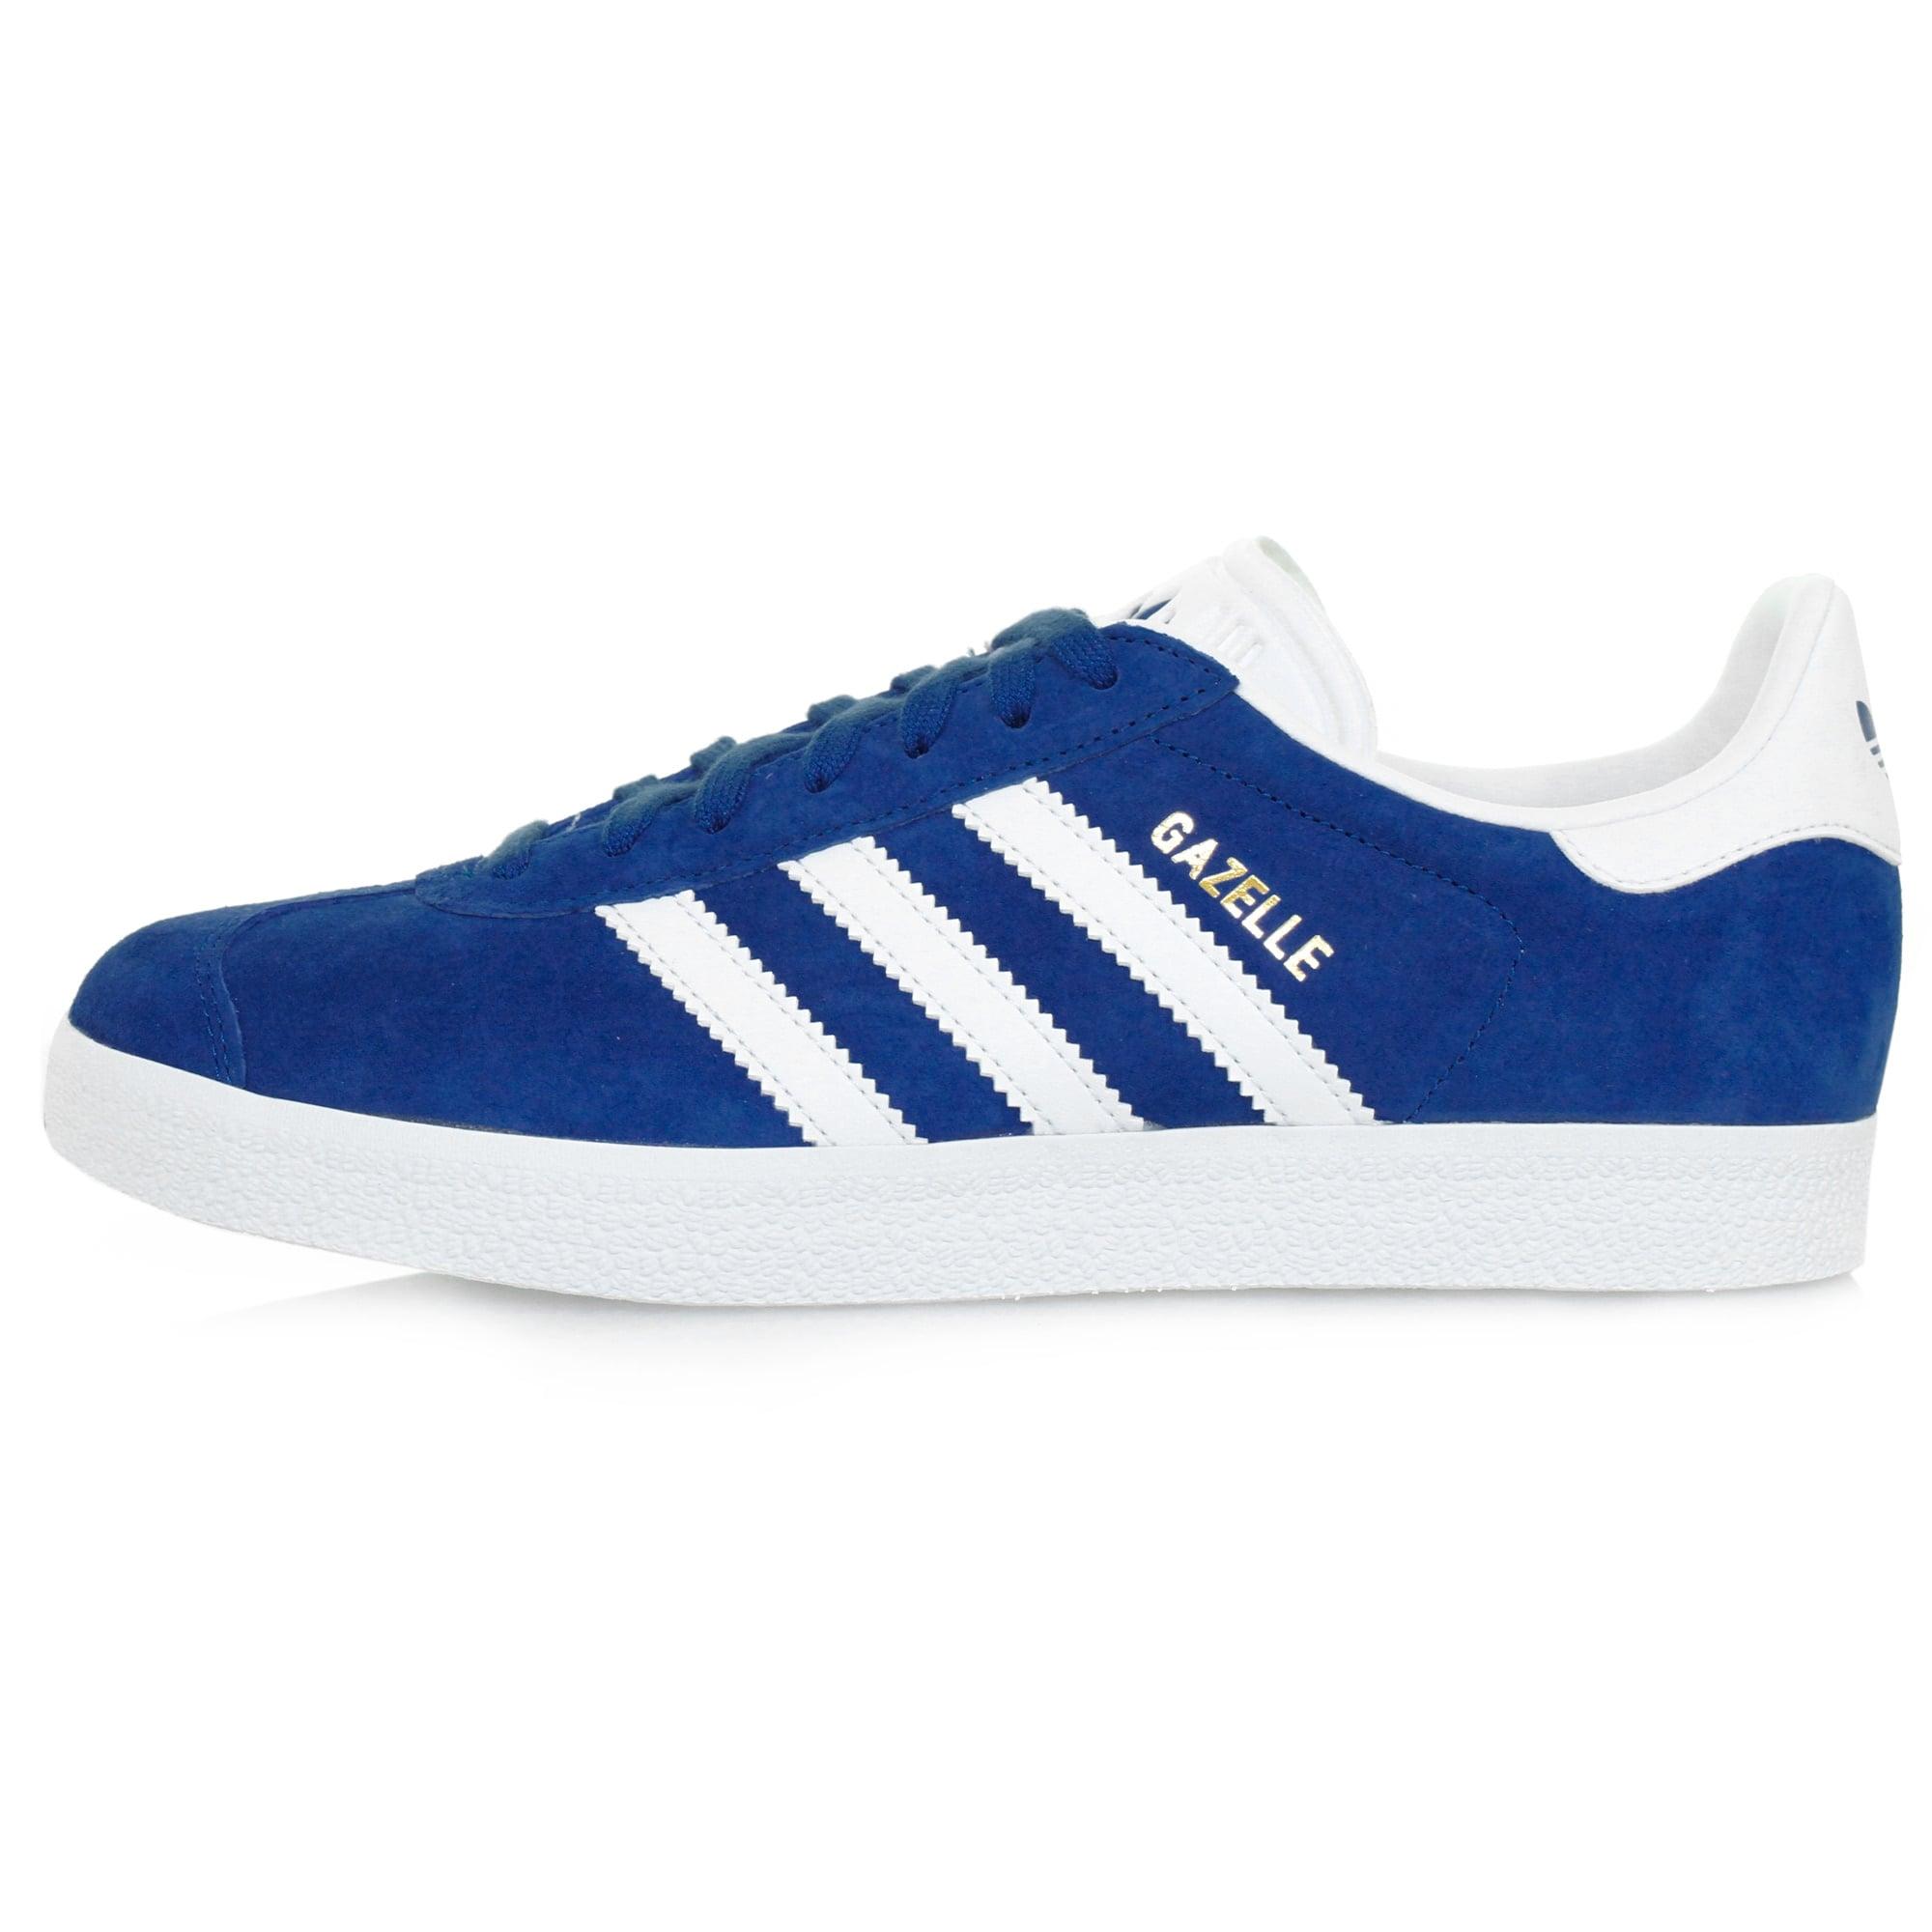 Lyst - Adidas originals Gazelle Royal Blue Suede Shoe S76227 in Blue ...